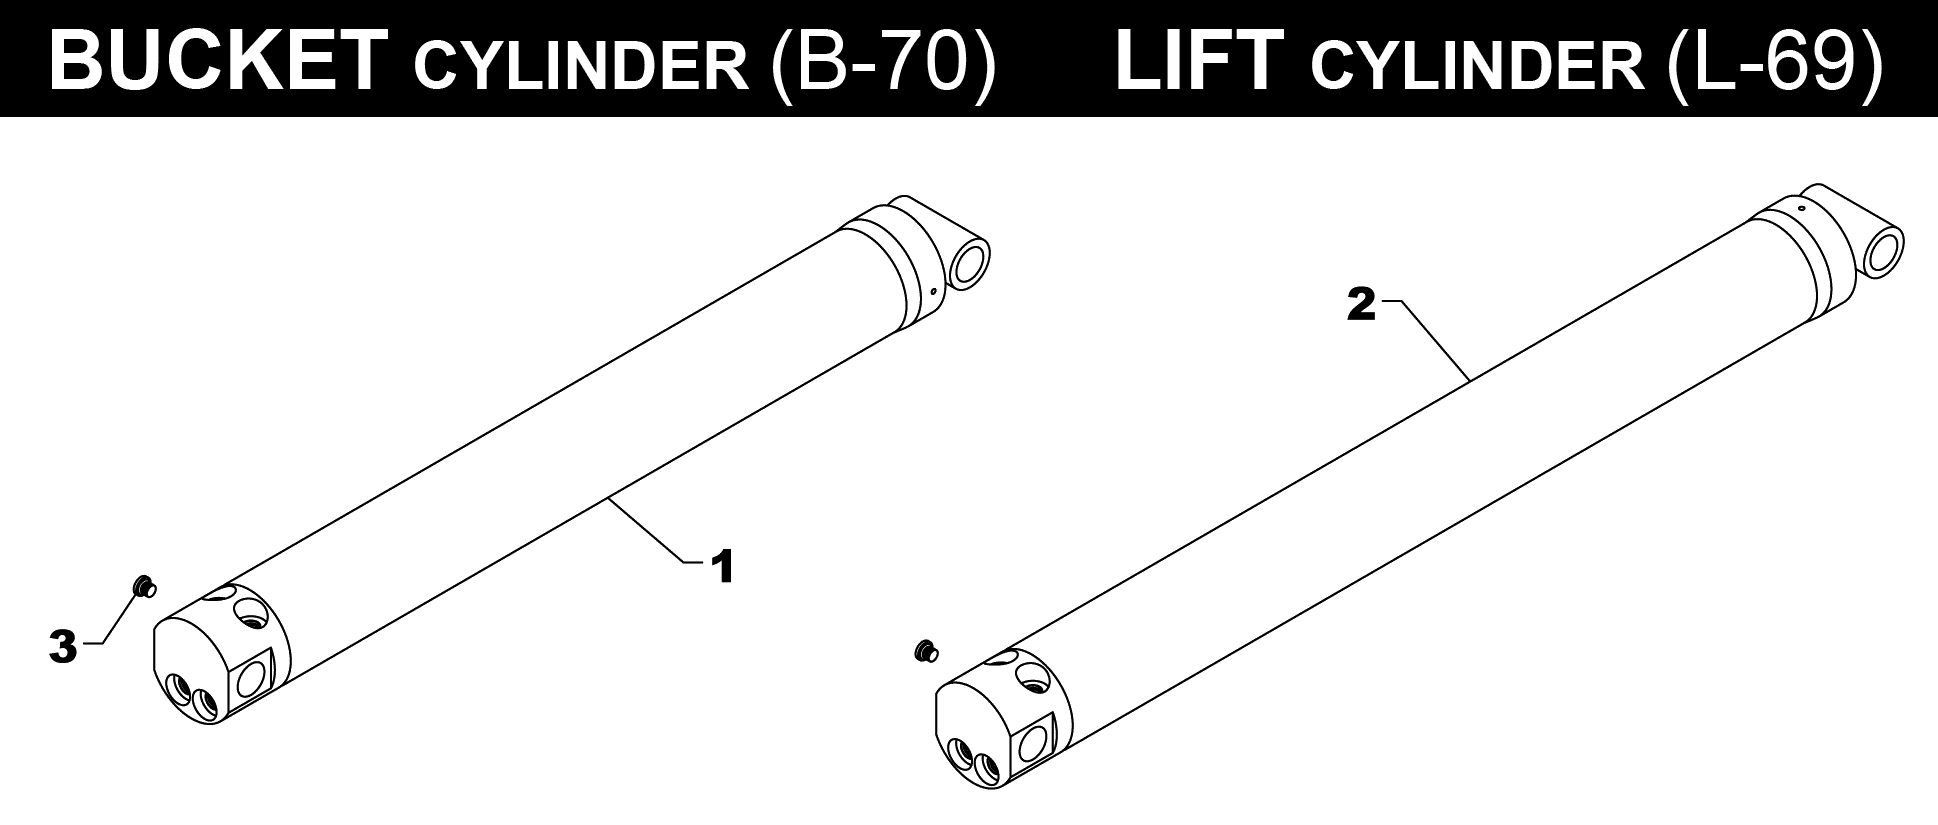 BUCKET & LIFT CYLINDERS  (B-70 & L-69)